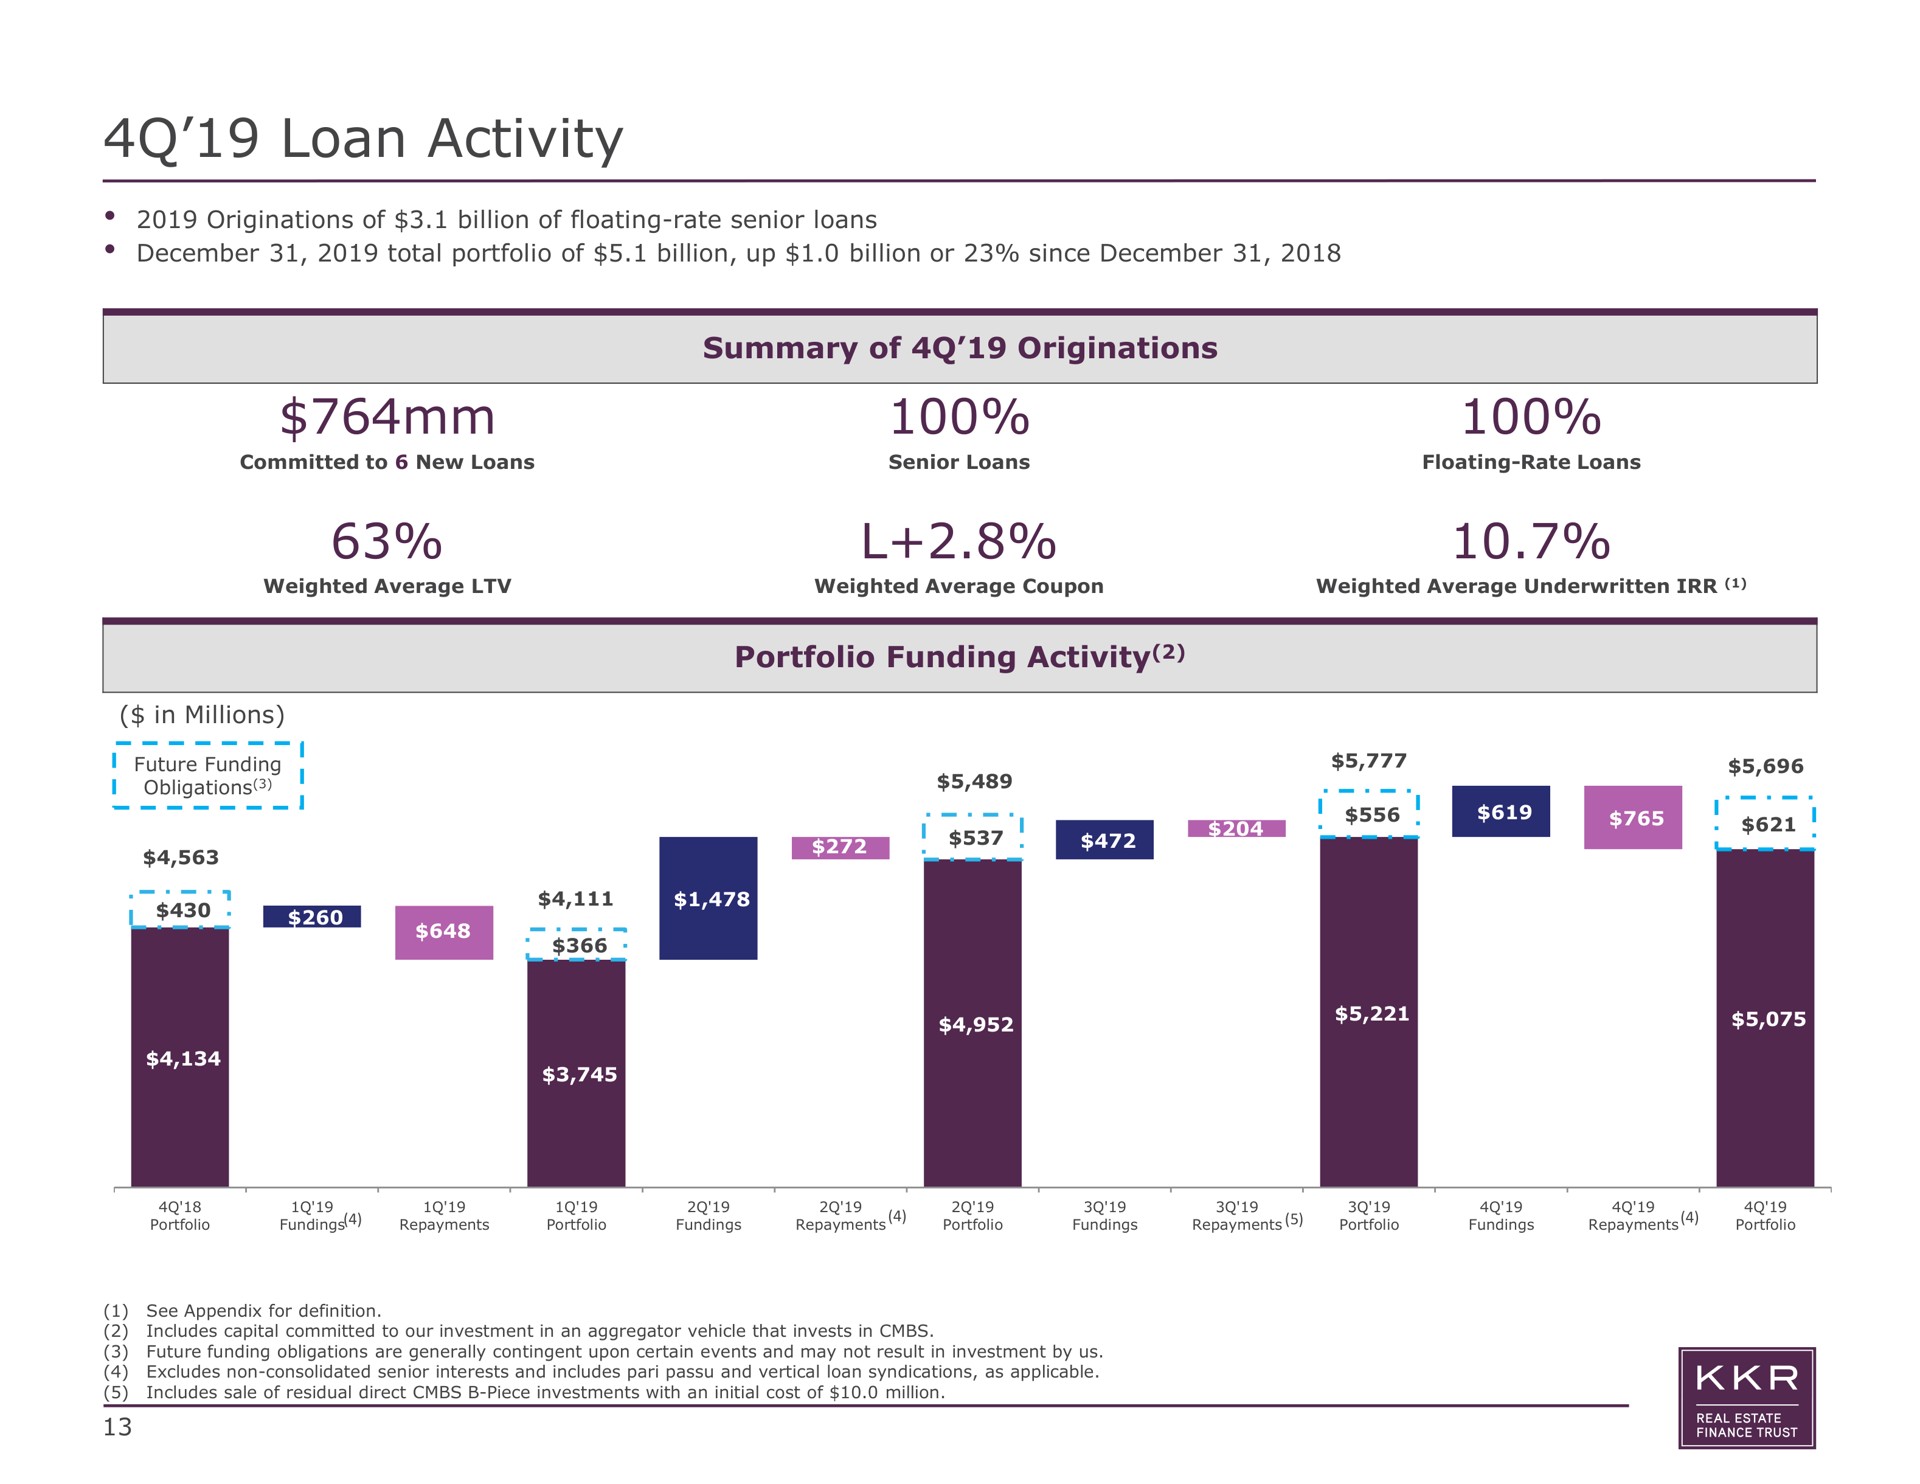 loan activity portfolio funding i future funding | KKR Real Estate Finance Trust